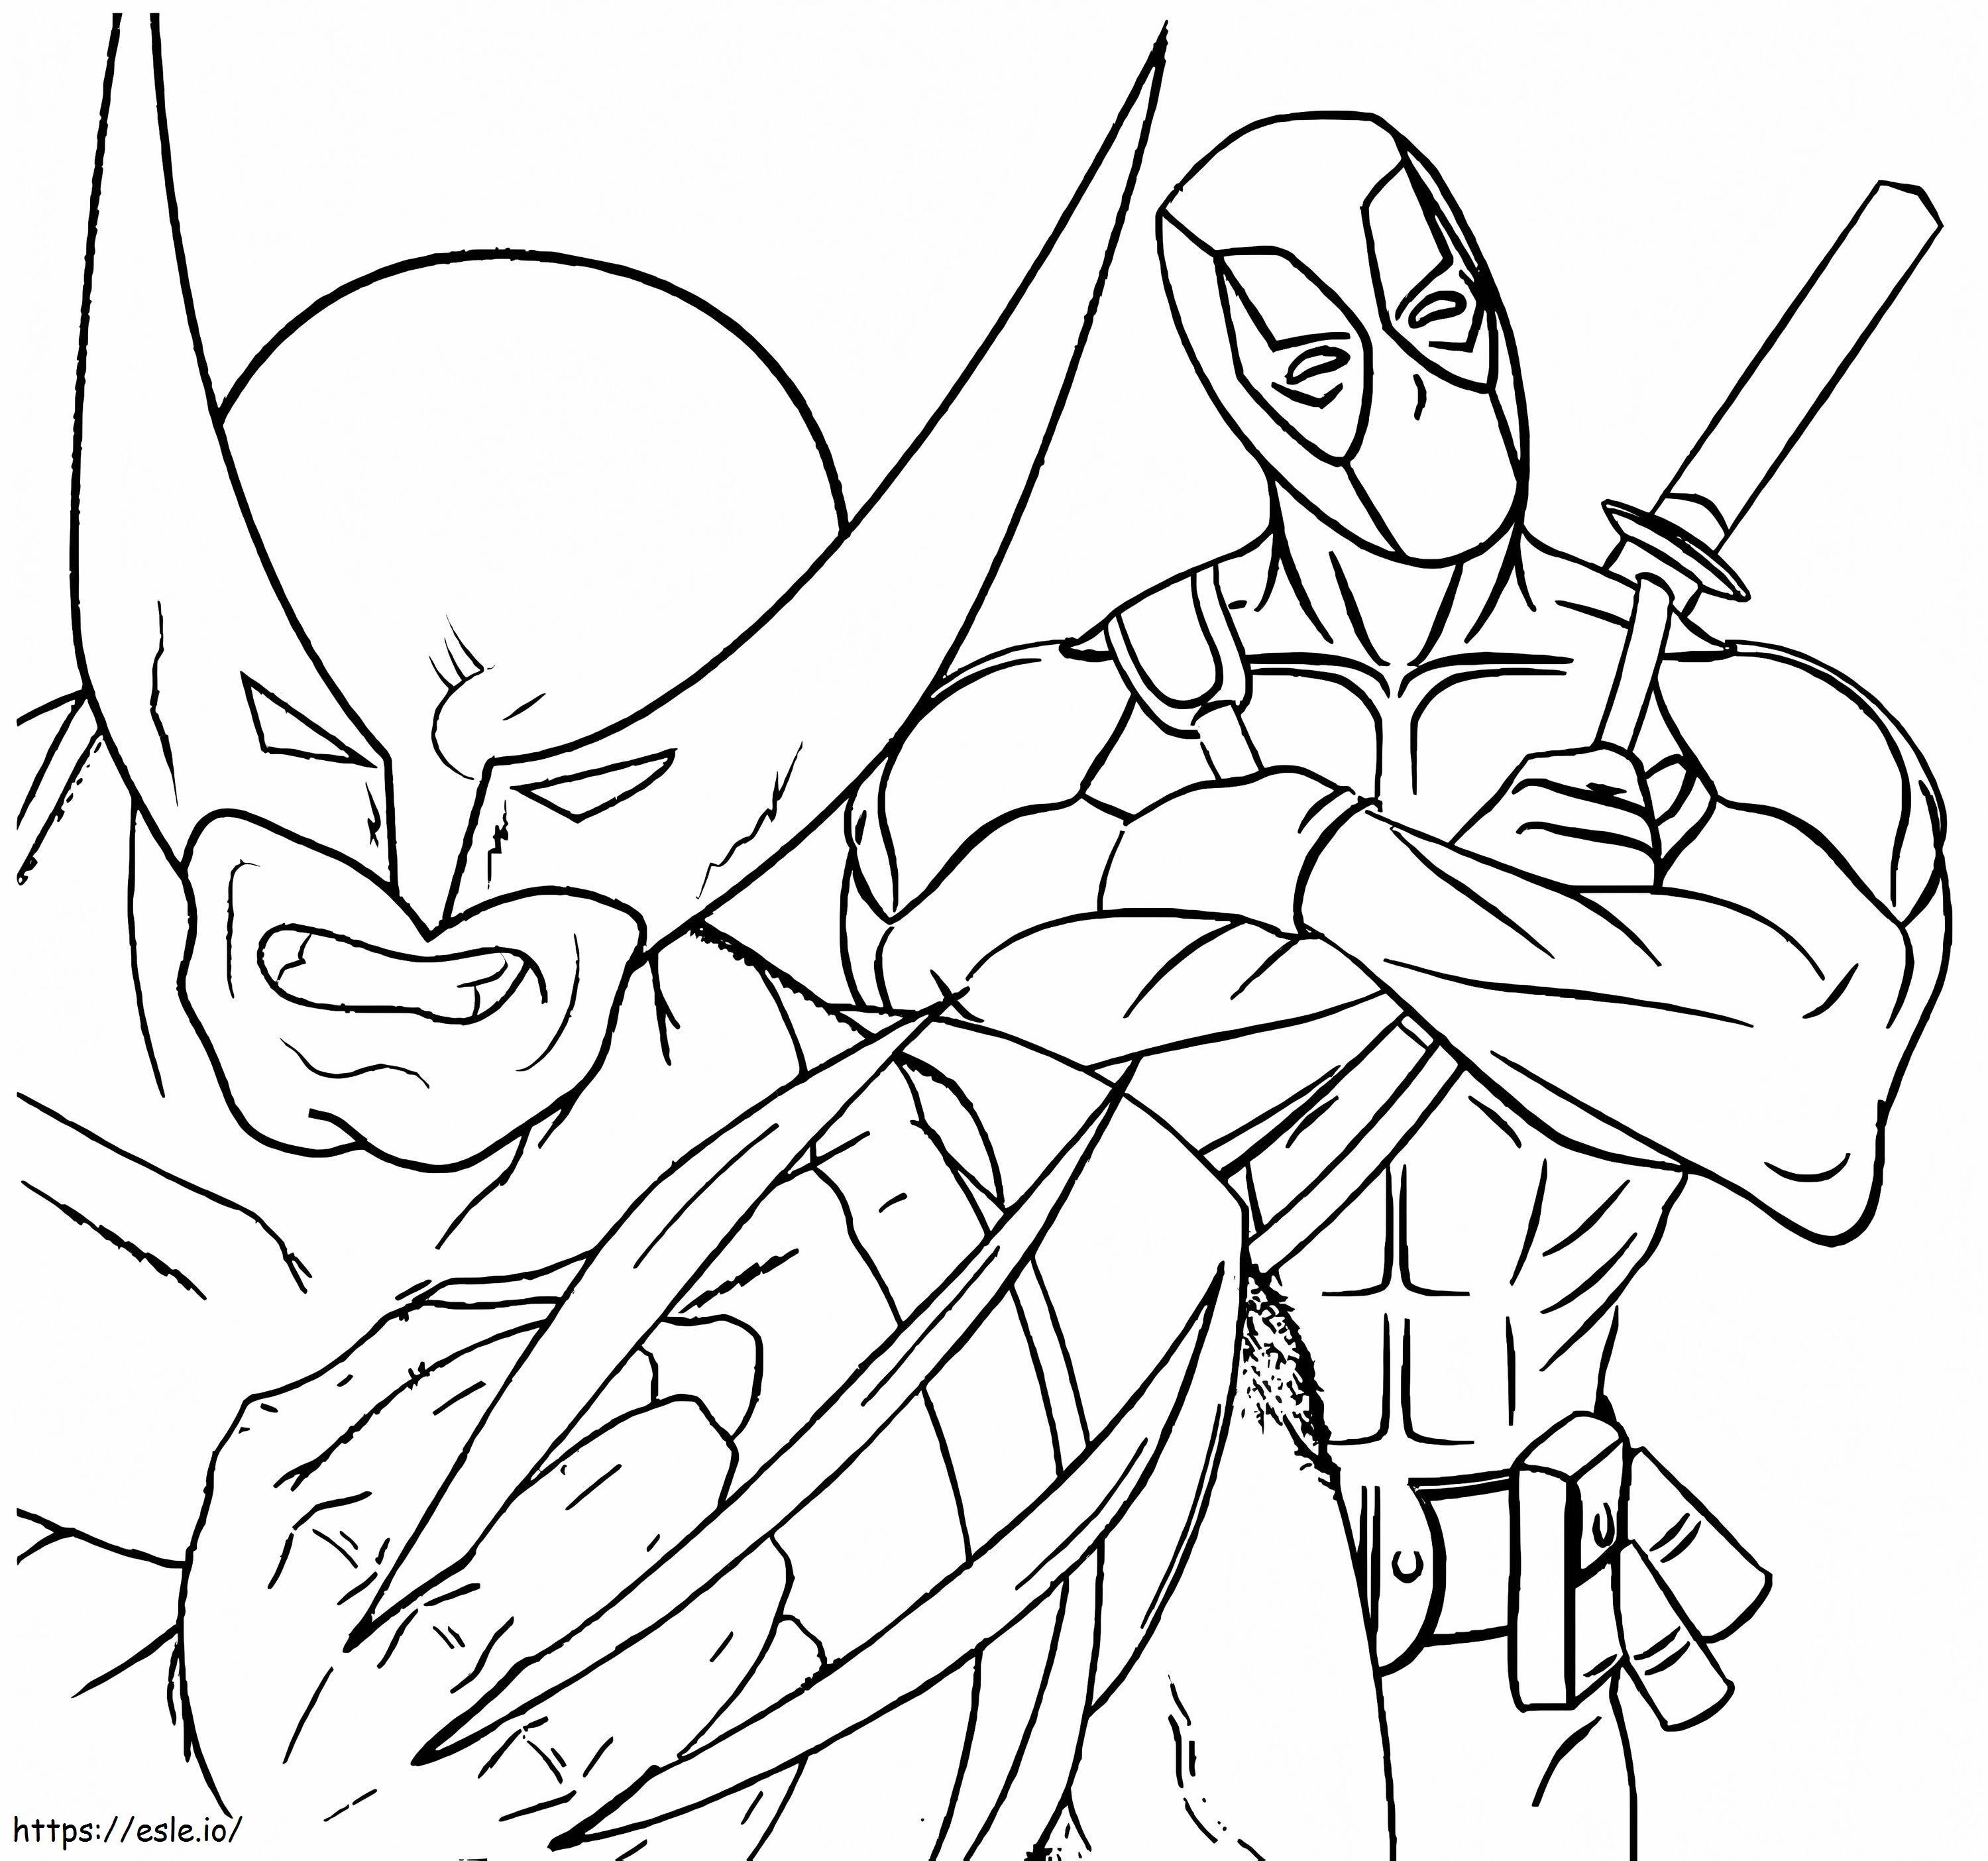 Deadpoola i Wolverine'a kolorowanka